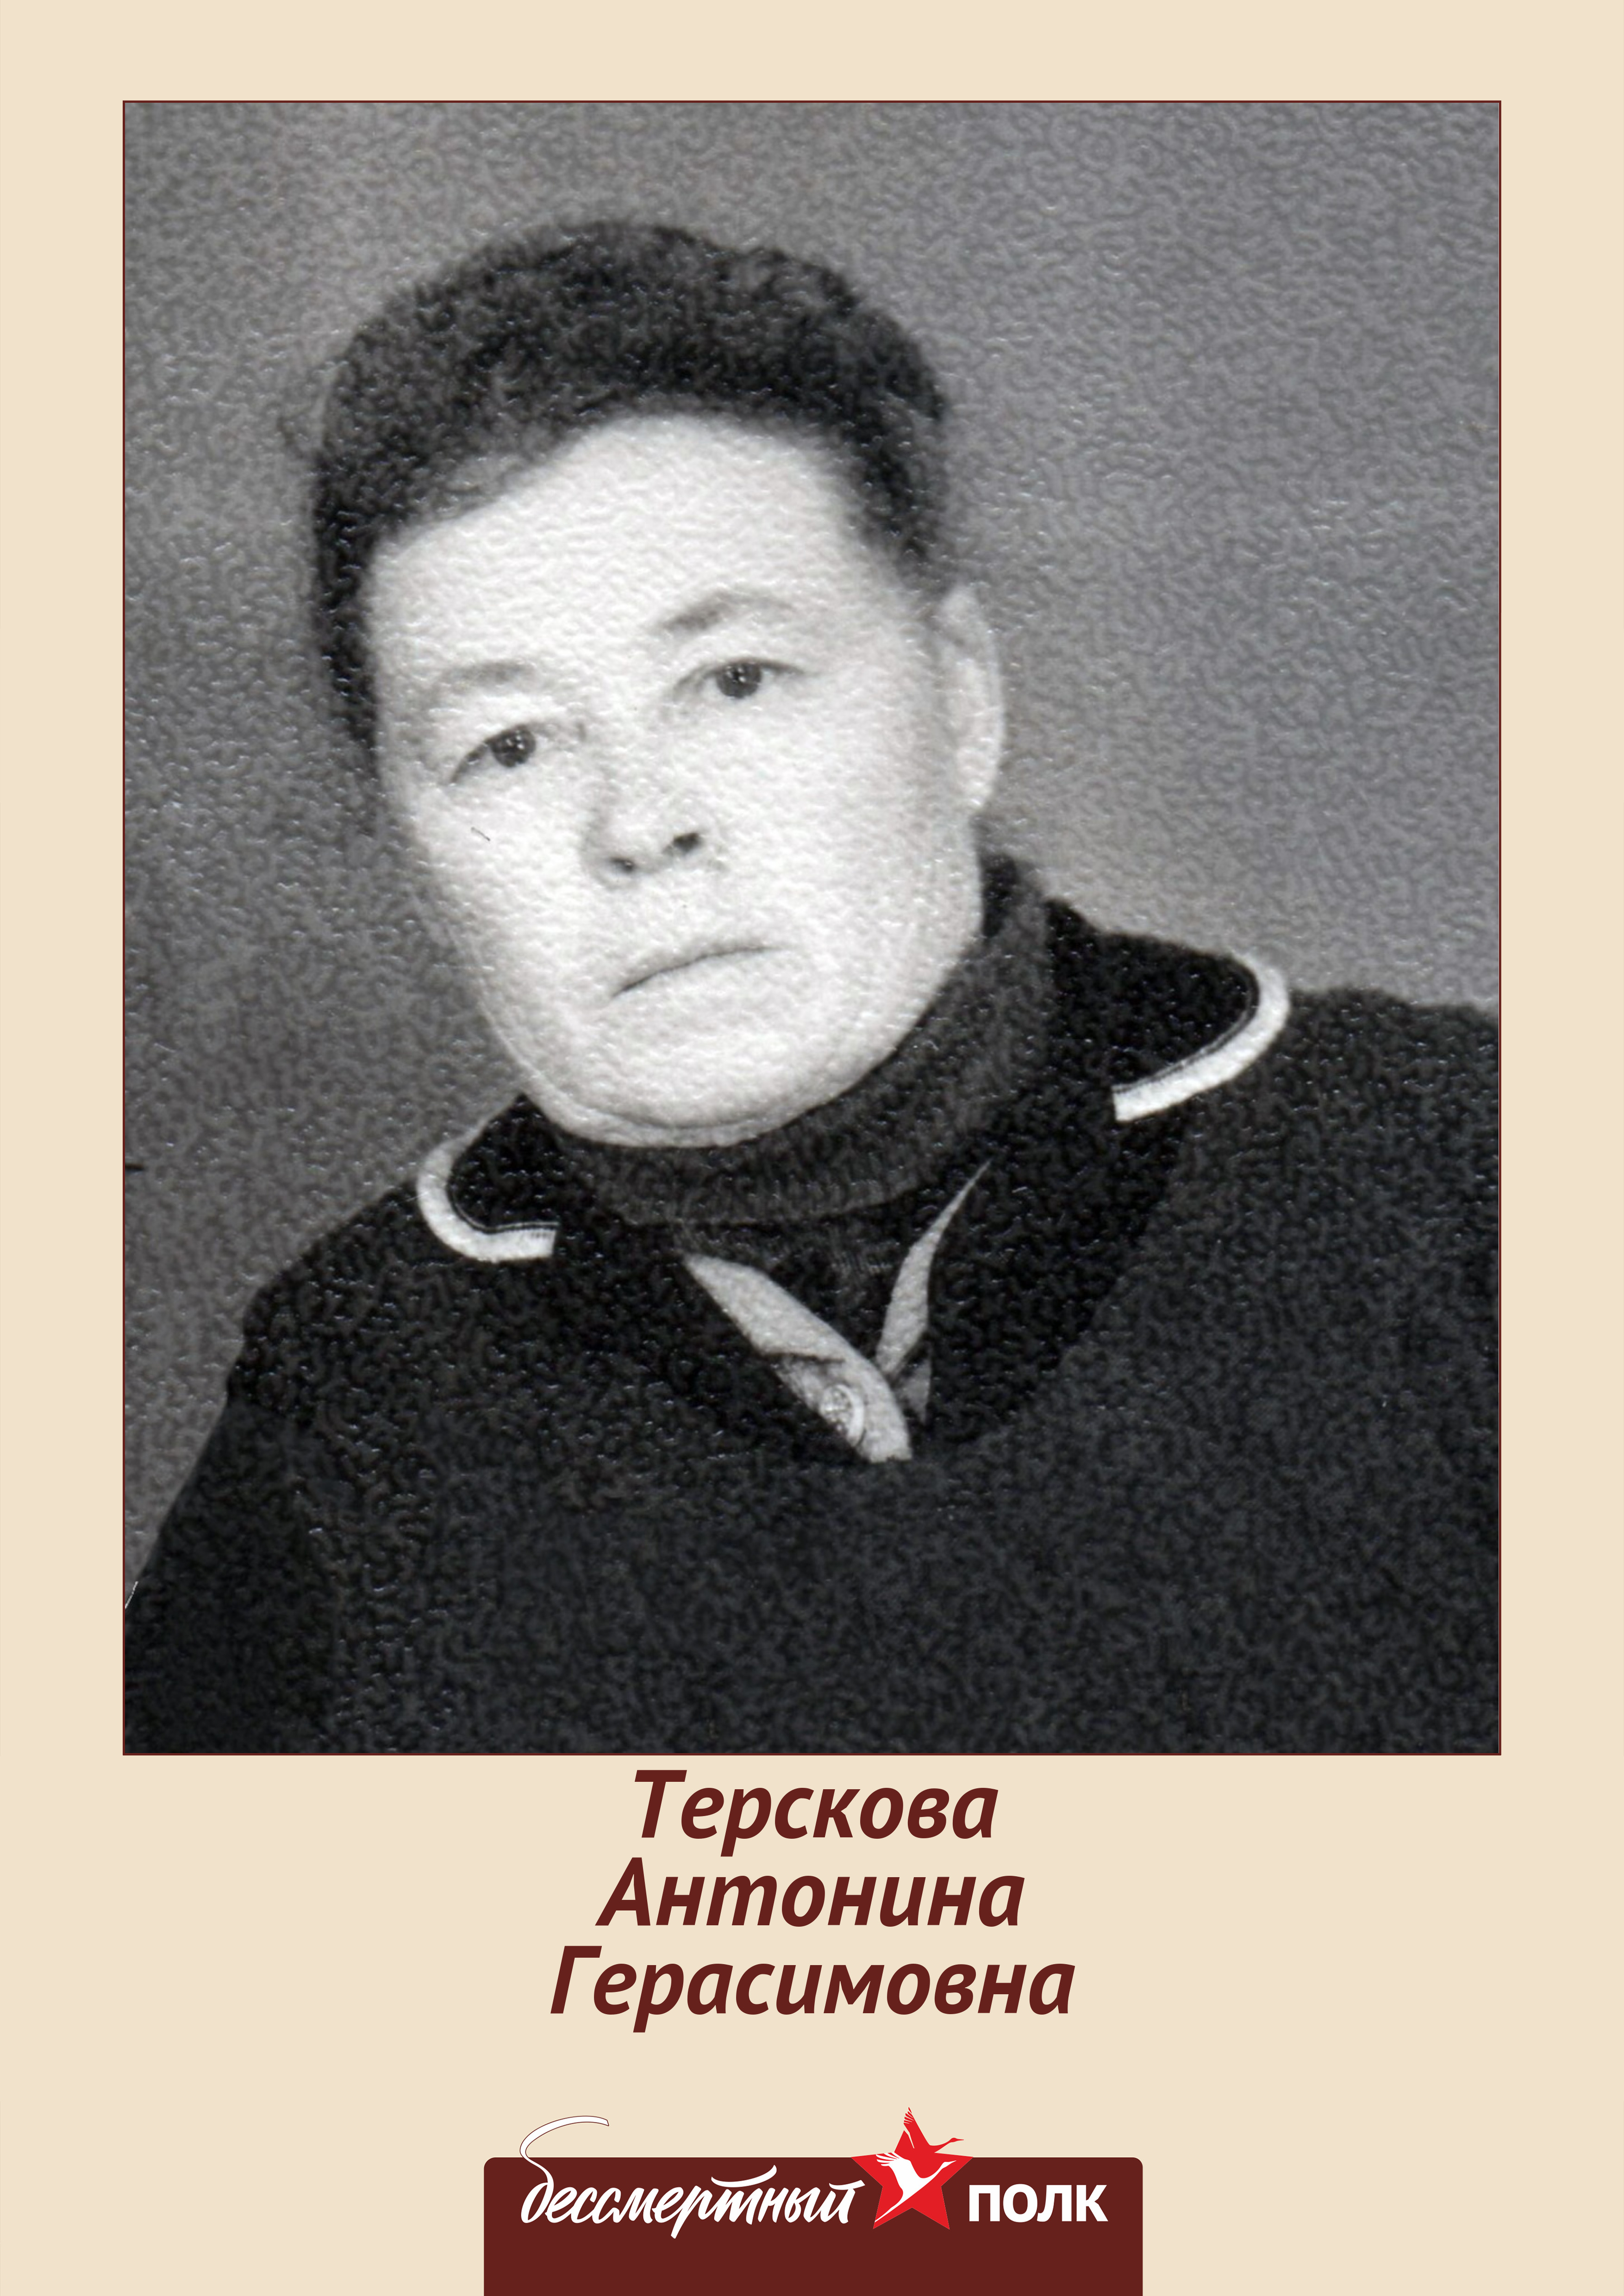 Терсква Антонина Герасимовна.